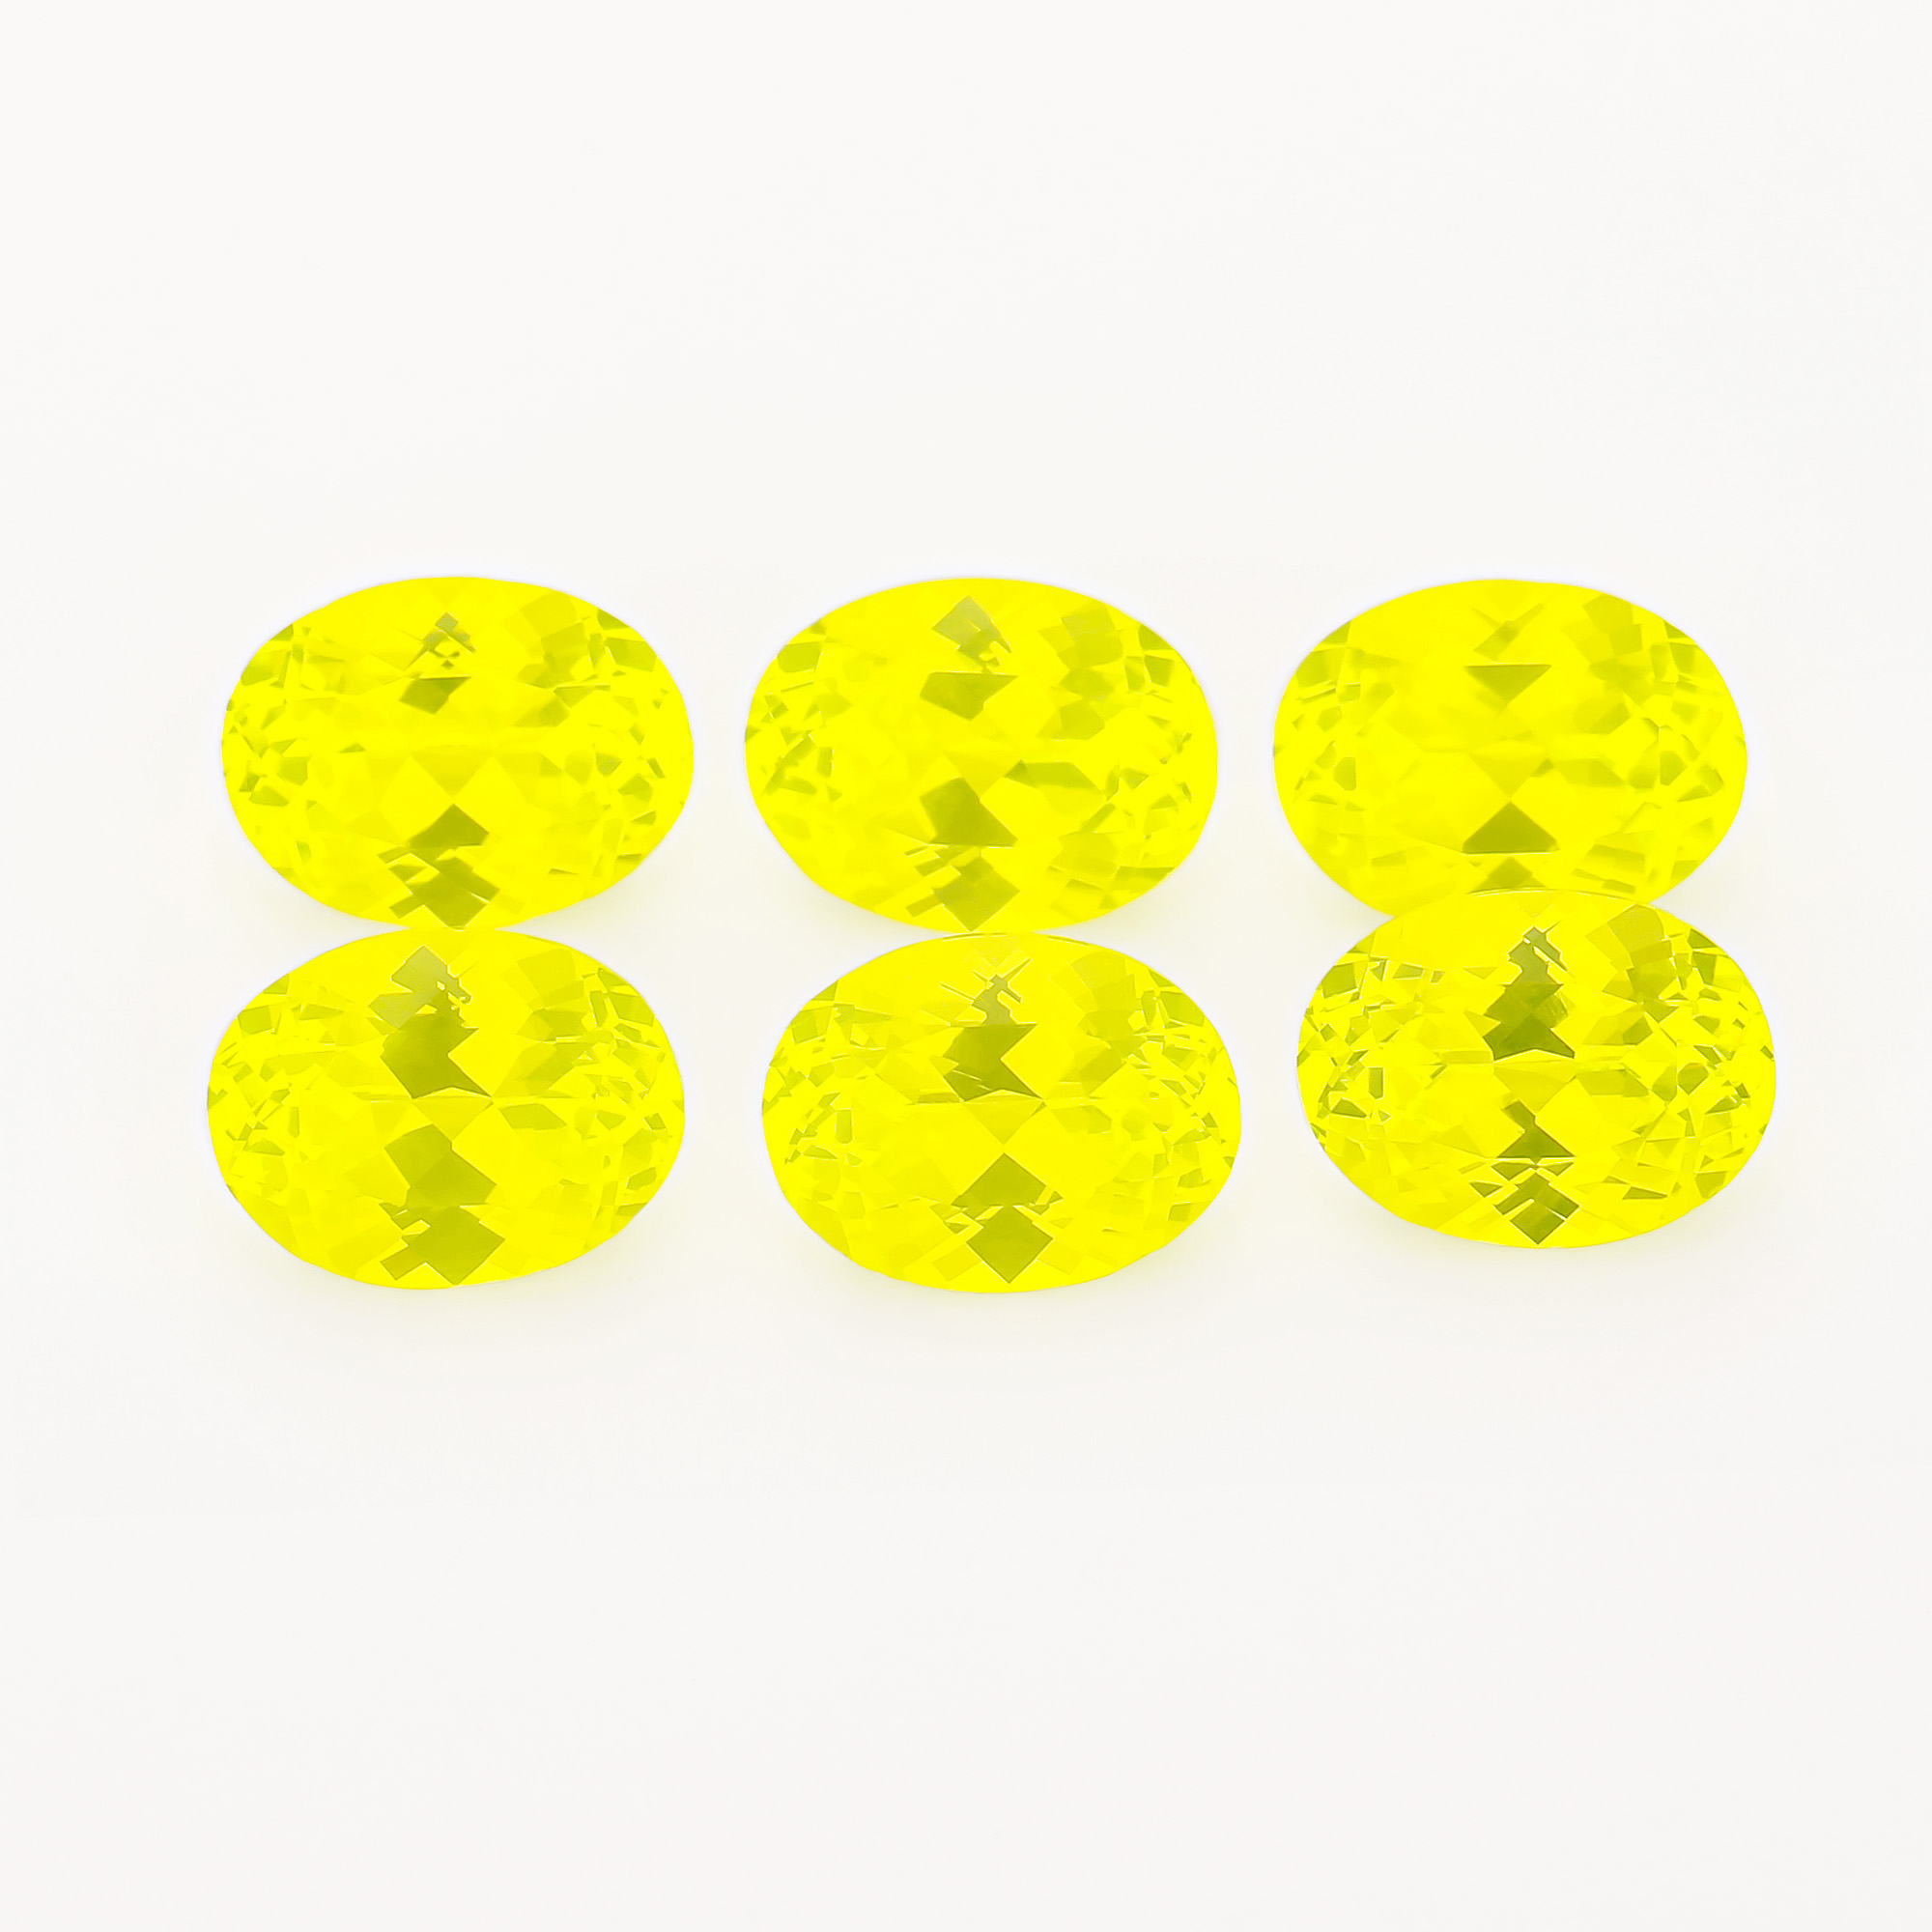 1Pcs 6x8MM Faceted Yellow Lumogarnet,Fluorescent Ce YAG,Yttrium Aluminum Garnet,Loose Gems, Manmade Yellow Crystal, UV Blacklight Dayglow,DIY Jewelry Supplies 4120147 - Click Image to Close